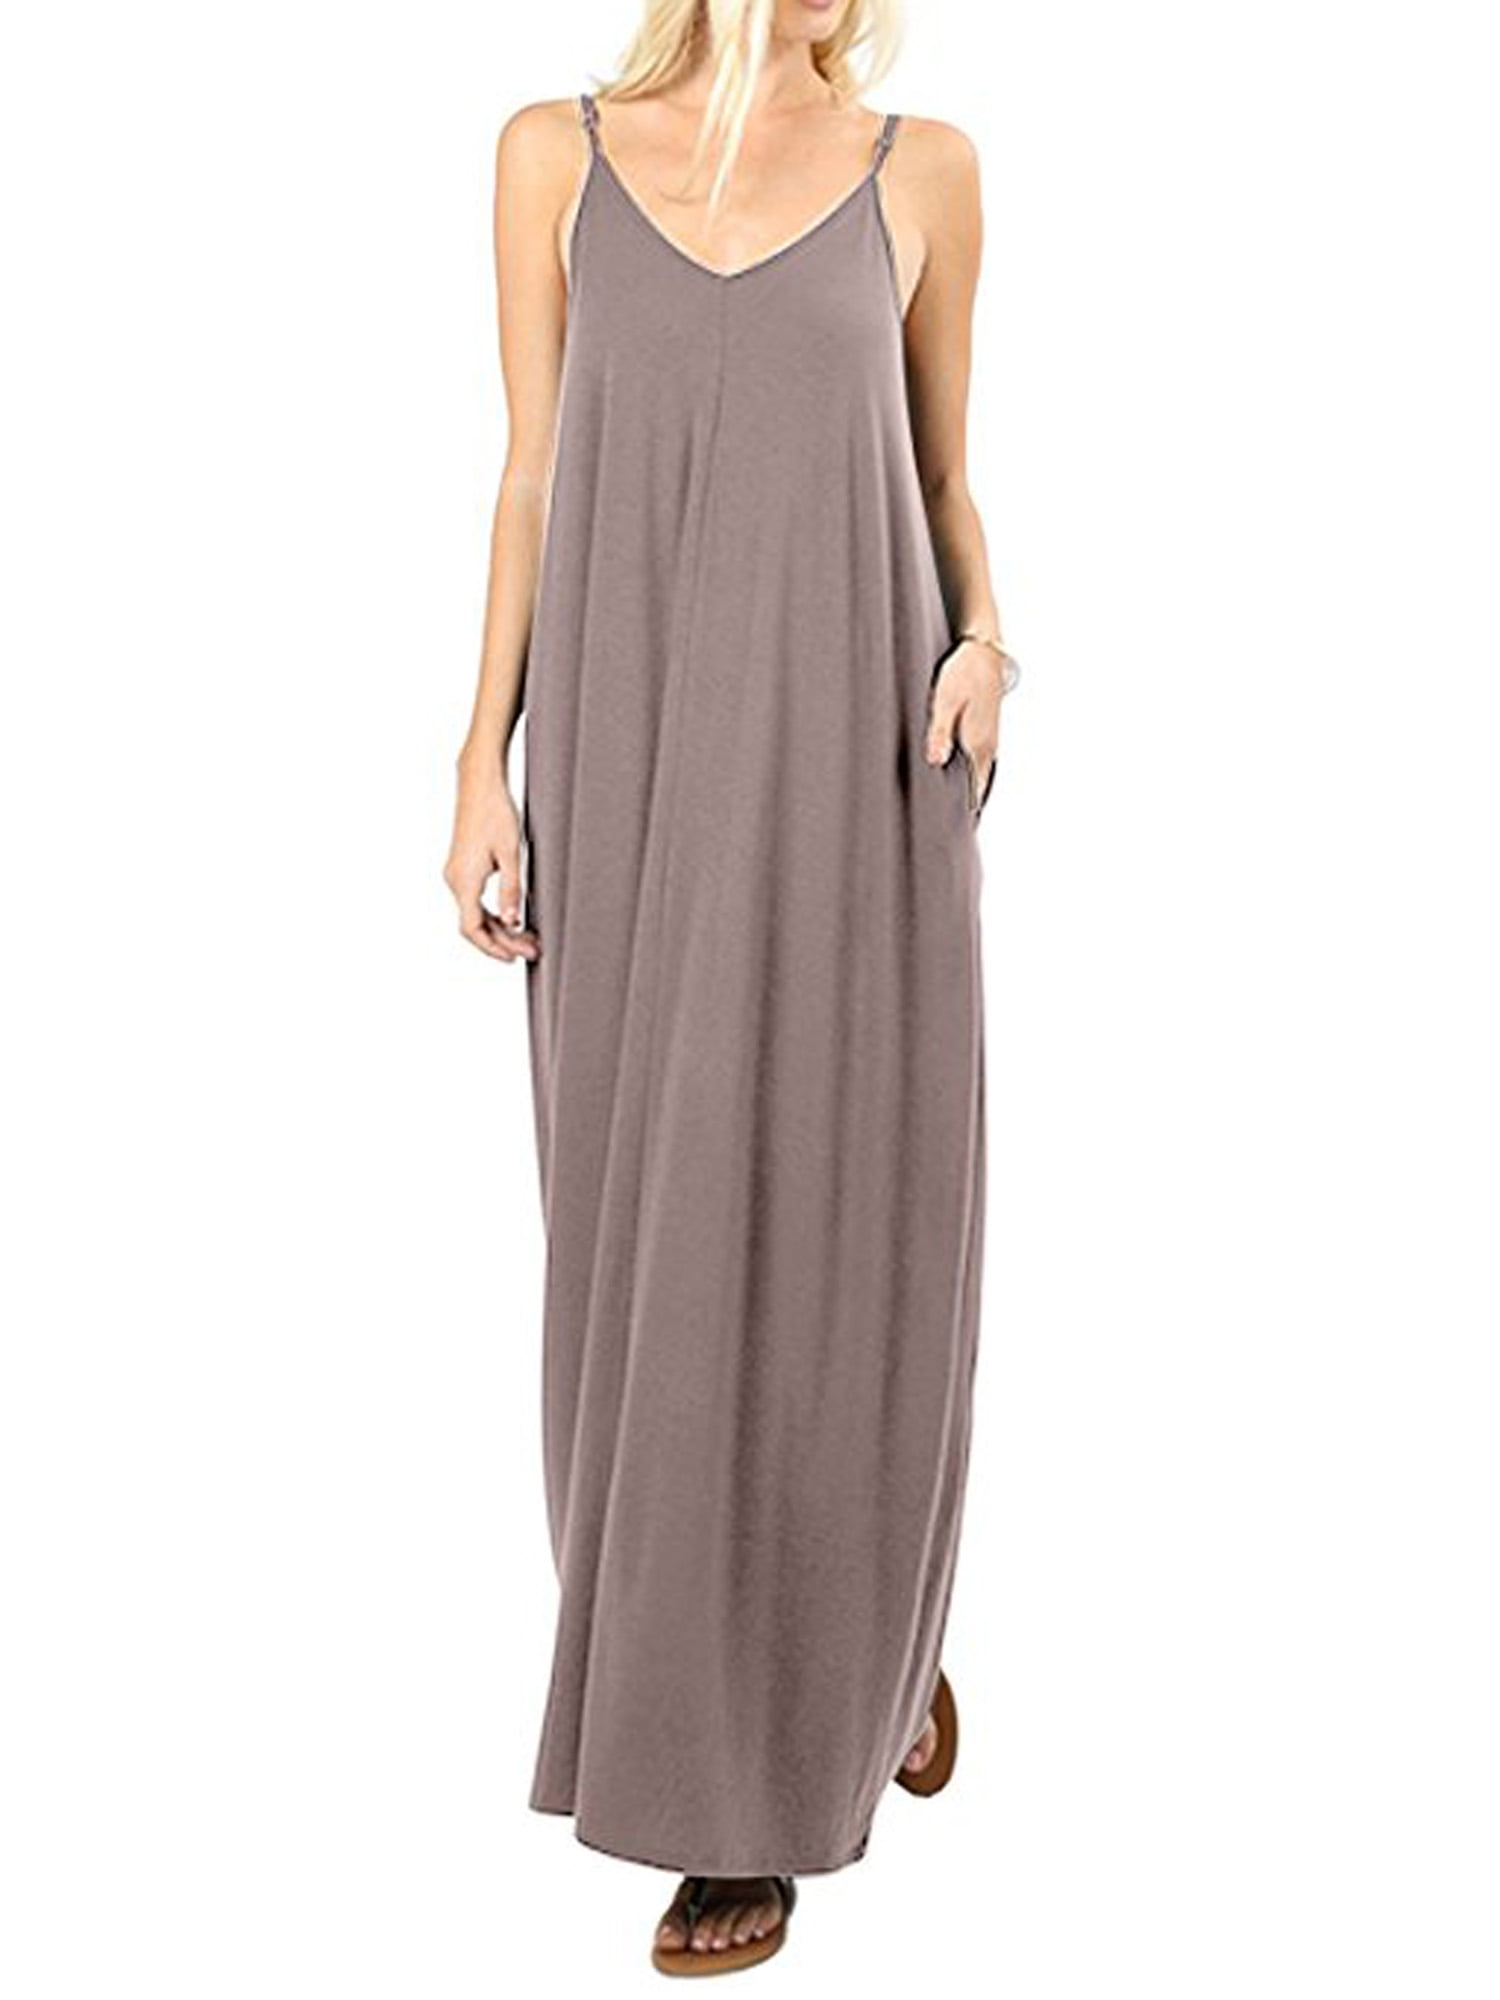 Onefa Womens Bohemian Plus Size Dress Vintage Print Sleeveless V Neck Casual Maxi Dress Gray, M